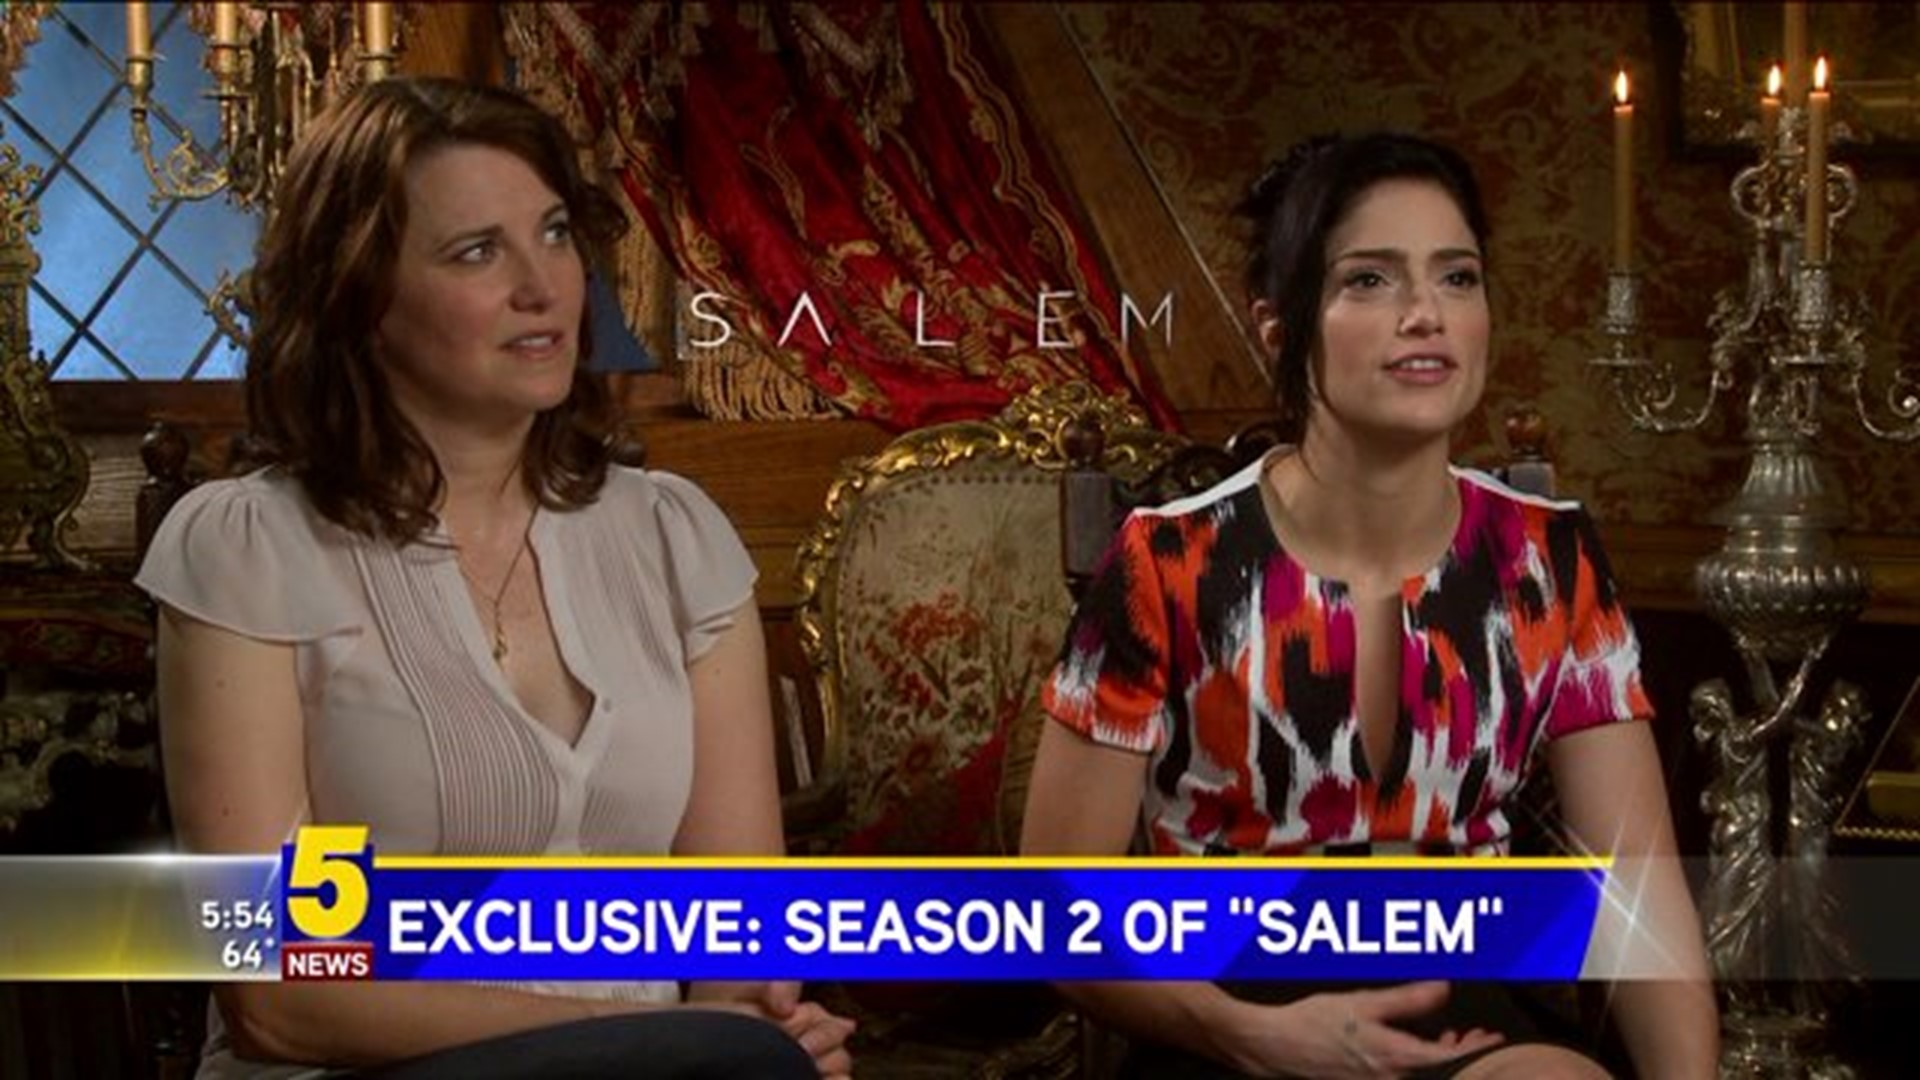 EXCLUSIVE: Season 2 of Salem